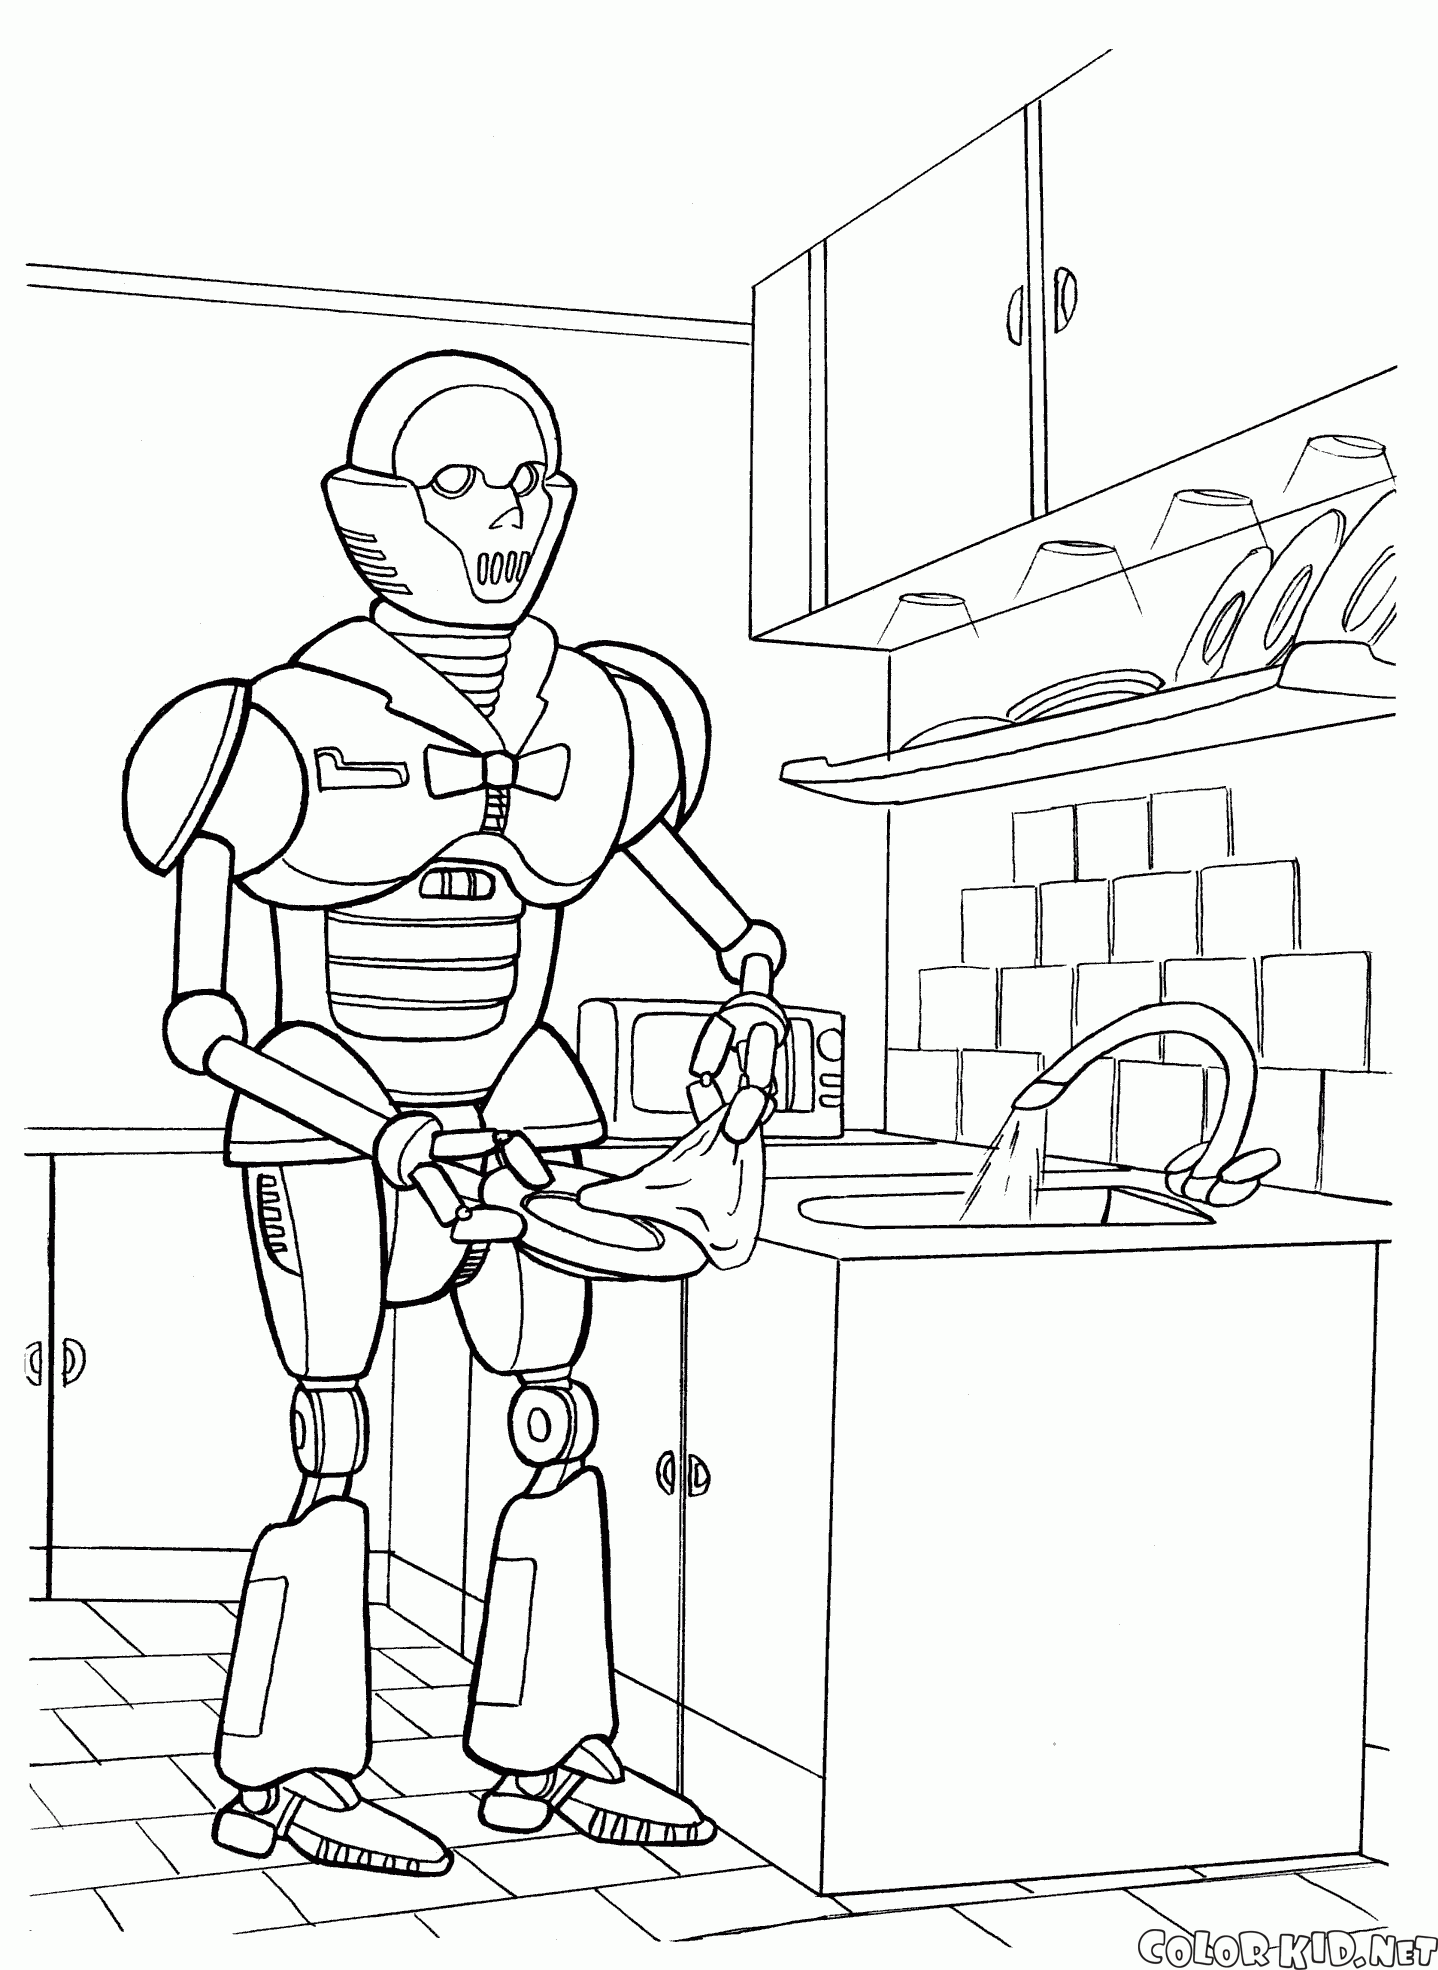 Robot de cuisine